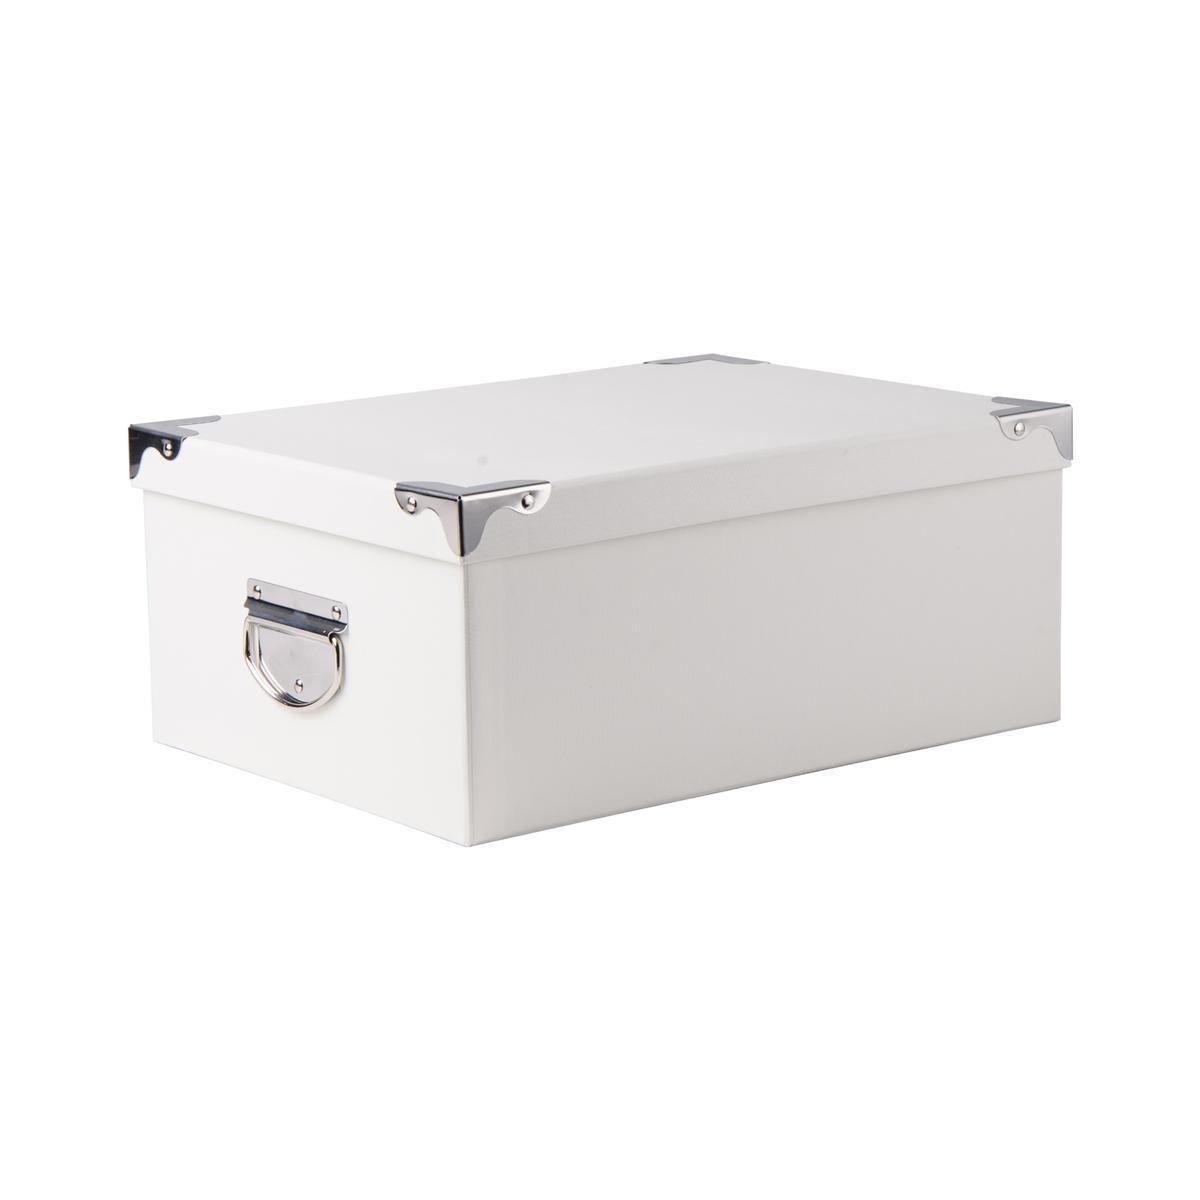 Boîte de rangement Lézard - Carton - 31 x 23,5 x 13,5 cm - Blanc